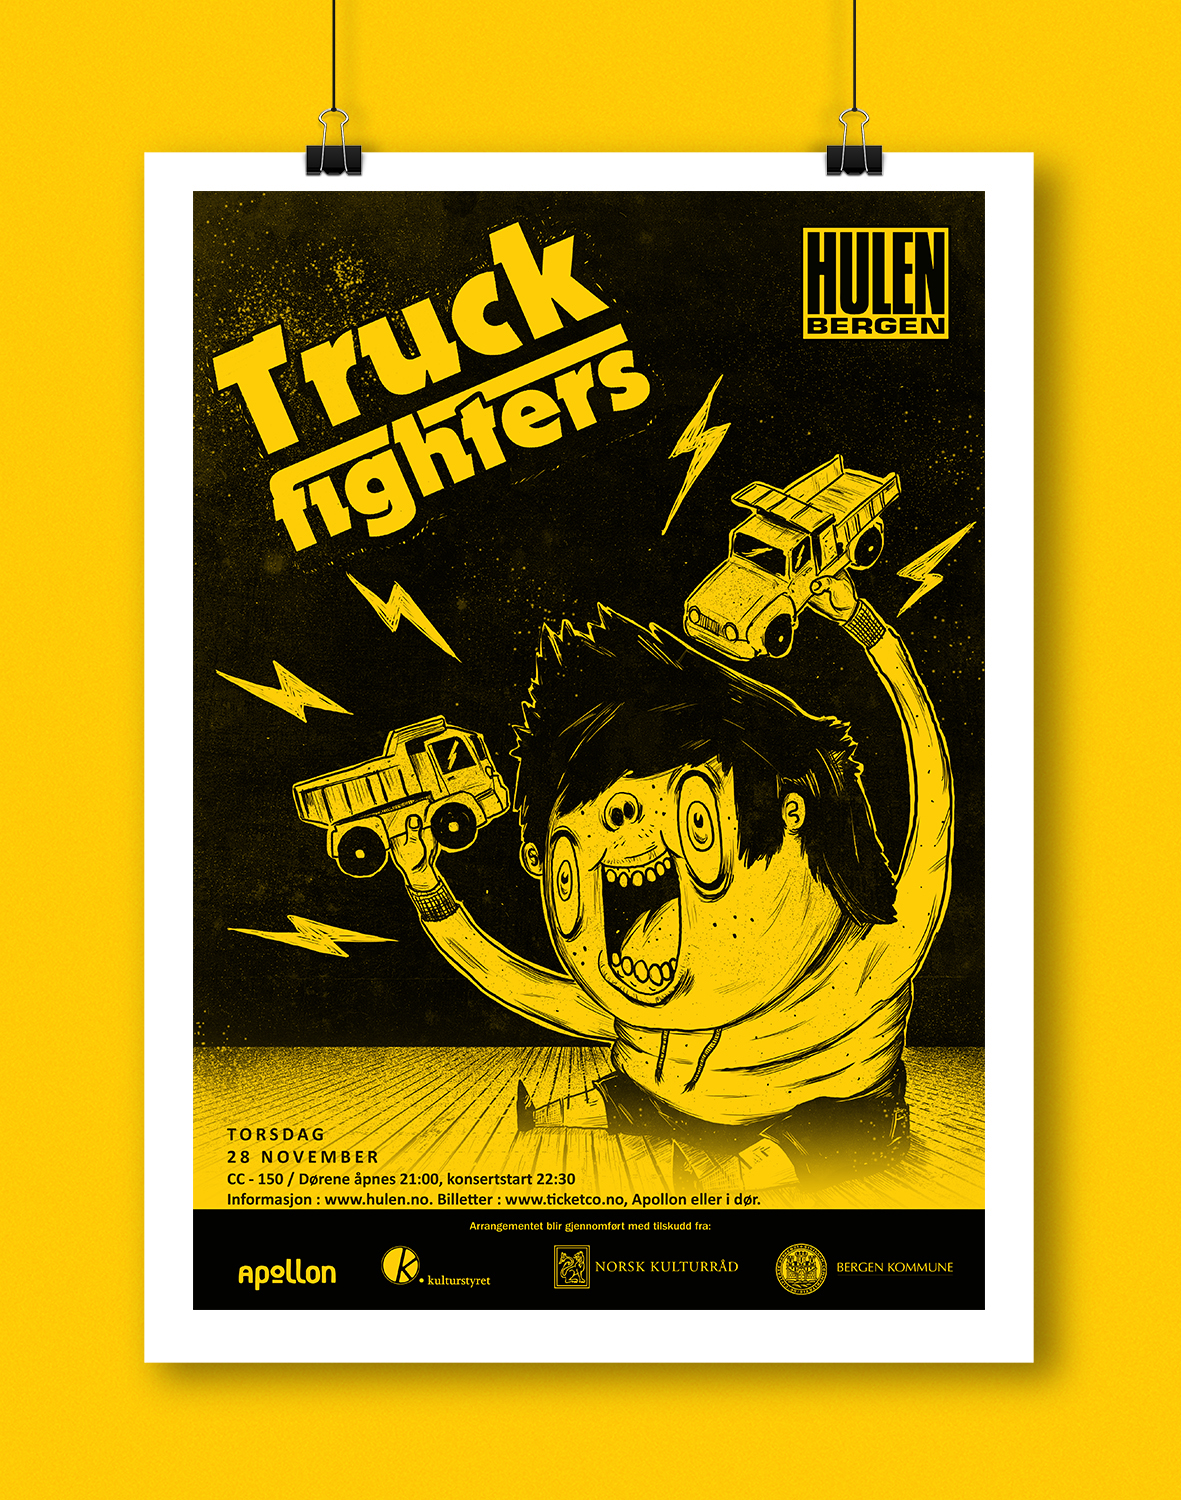 rumble in rhodos Truckfighters Yuma Sun MarOder Comet Kid poster rockbar hulen